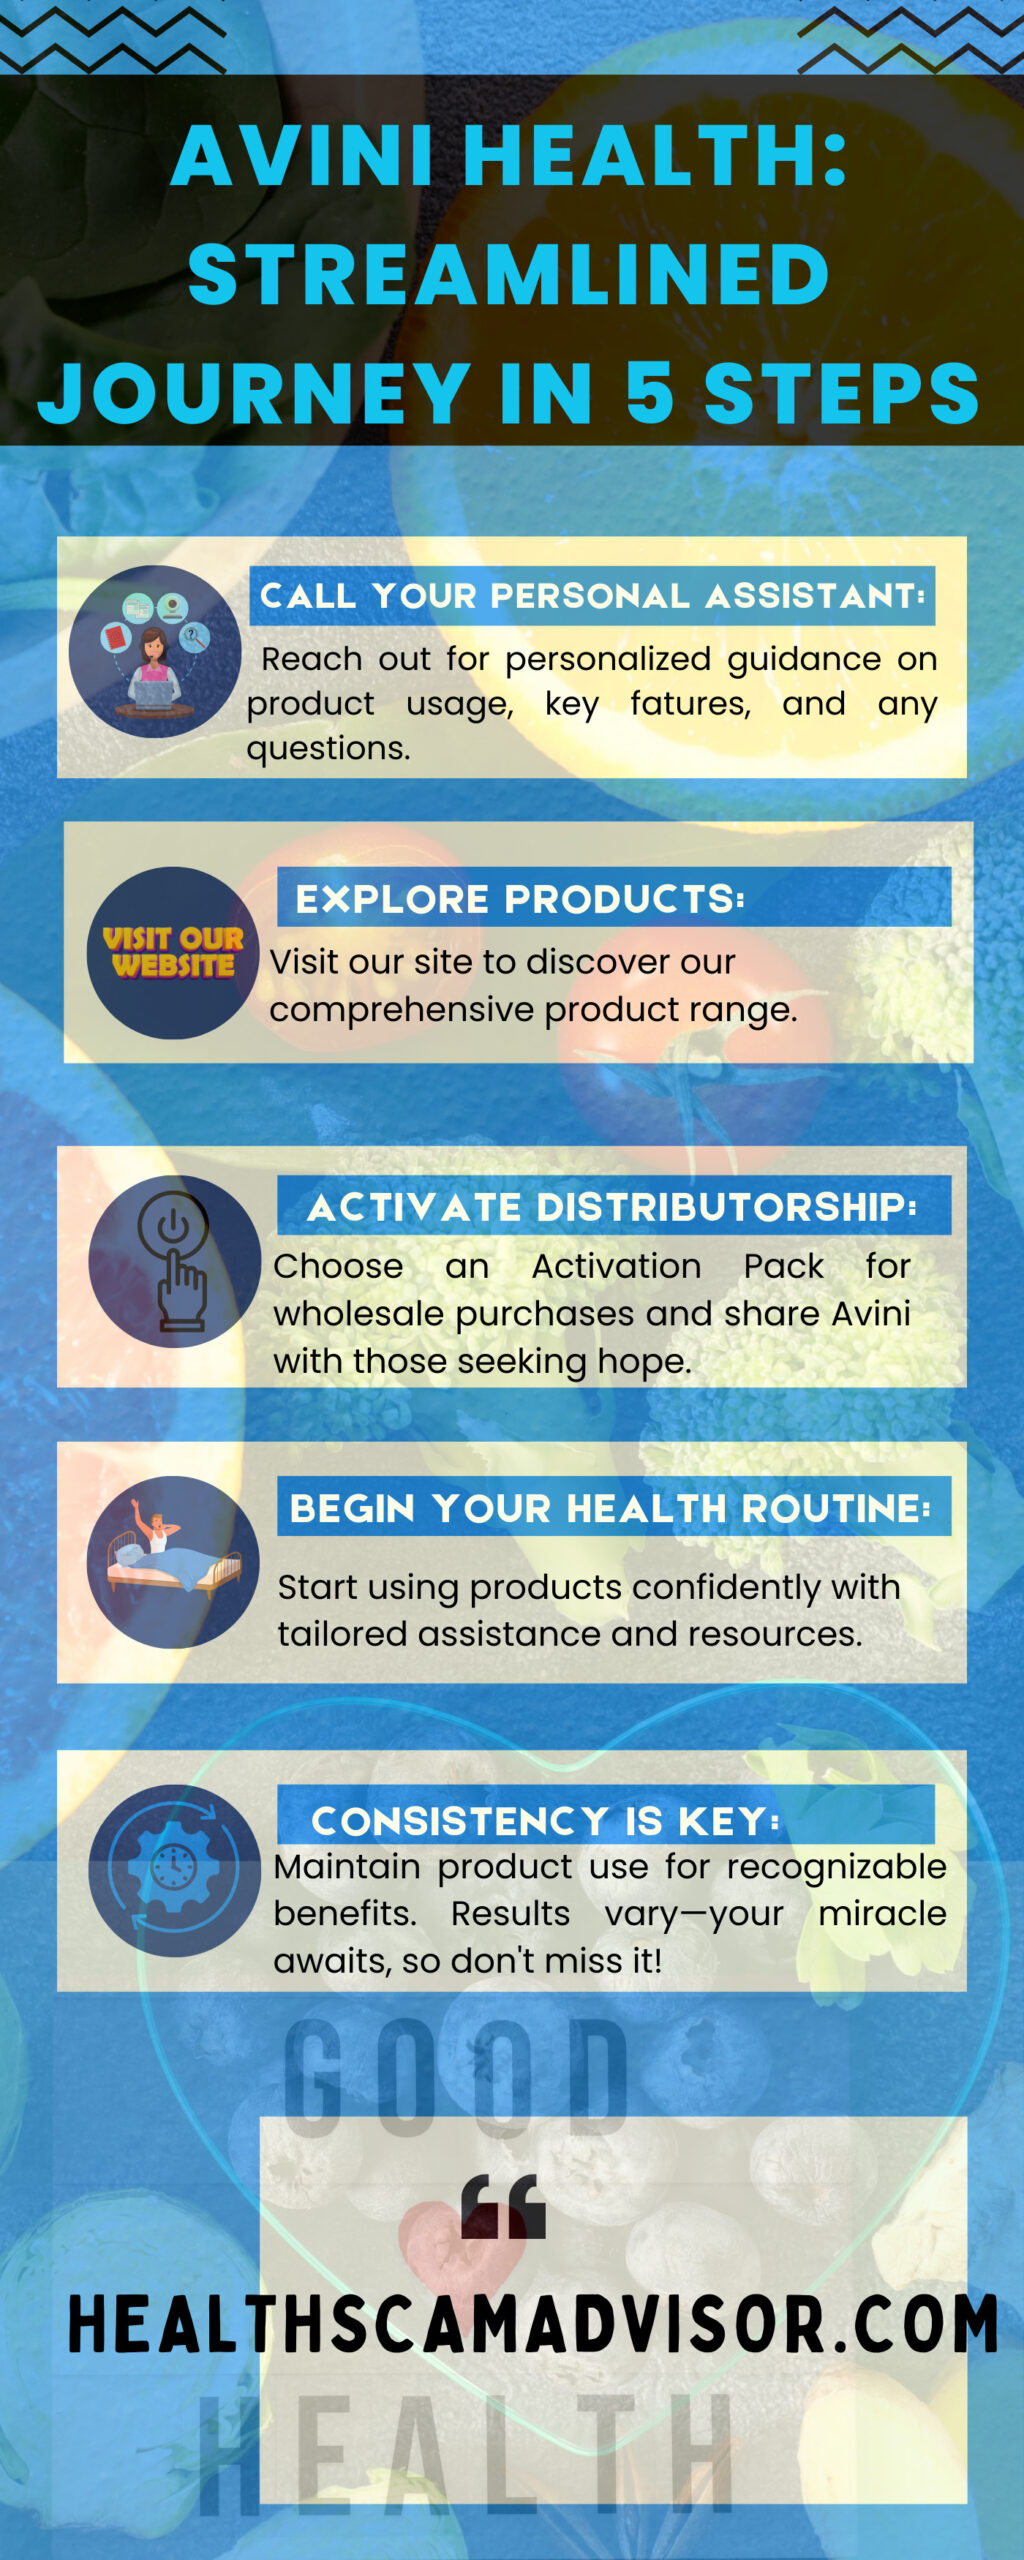 An infographic for Avini Health Streamlined Journey in 5 Steps